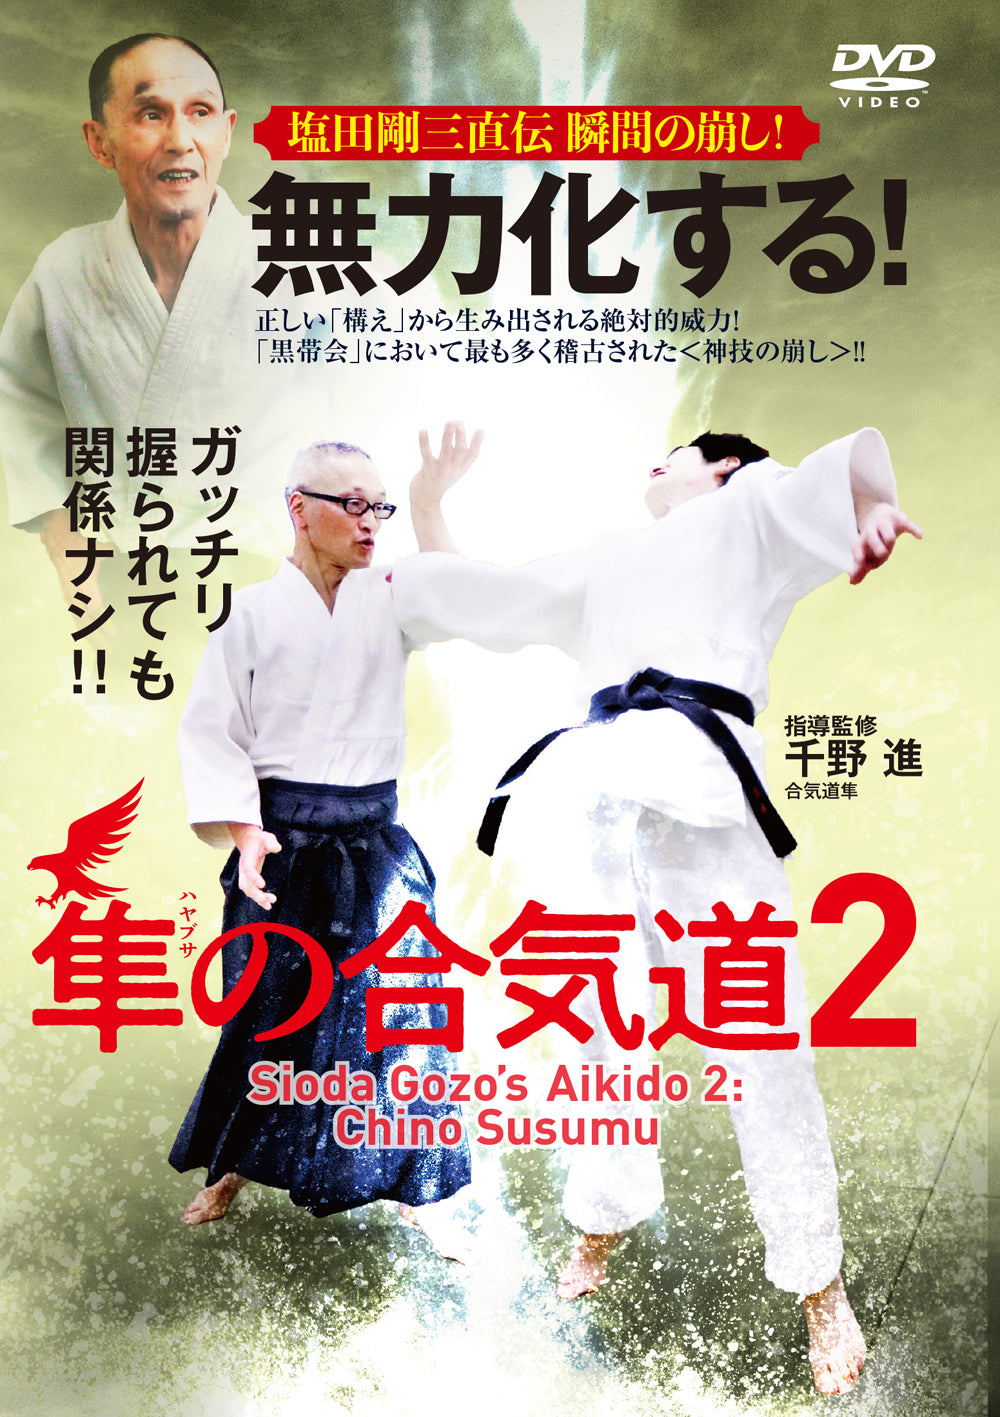 DVD de Aikido Vol 2 de Gozo Shioda de Susumu Chino